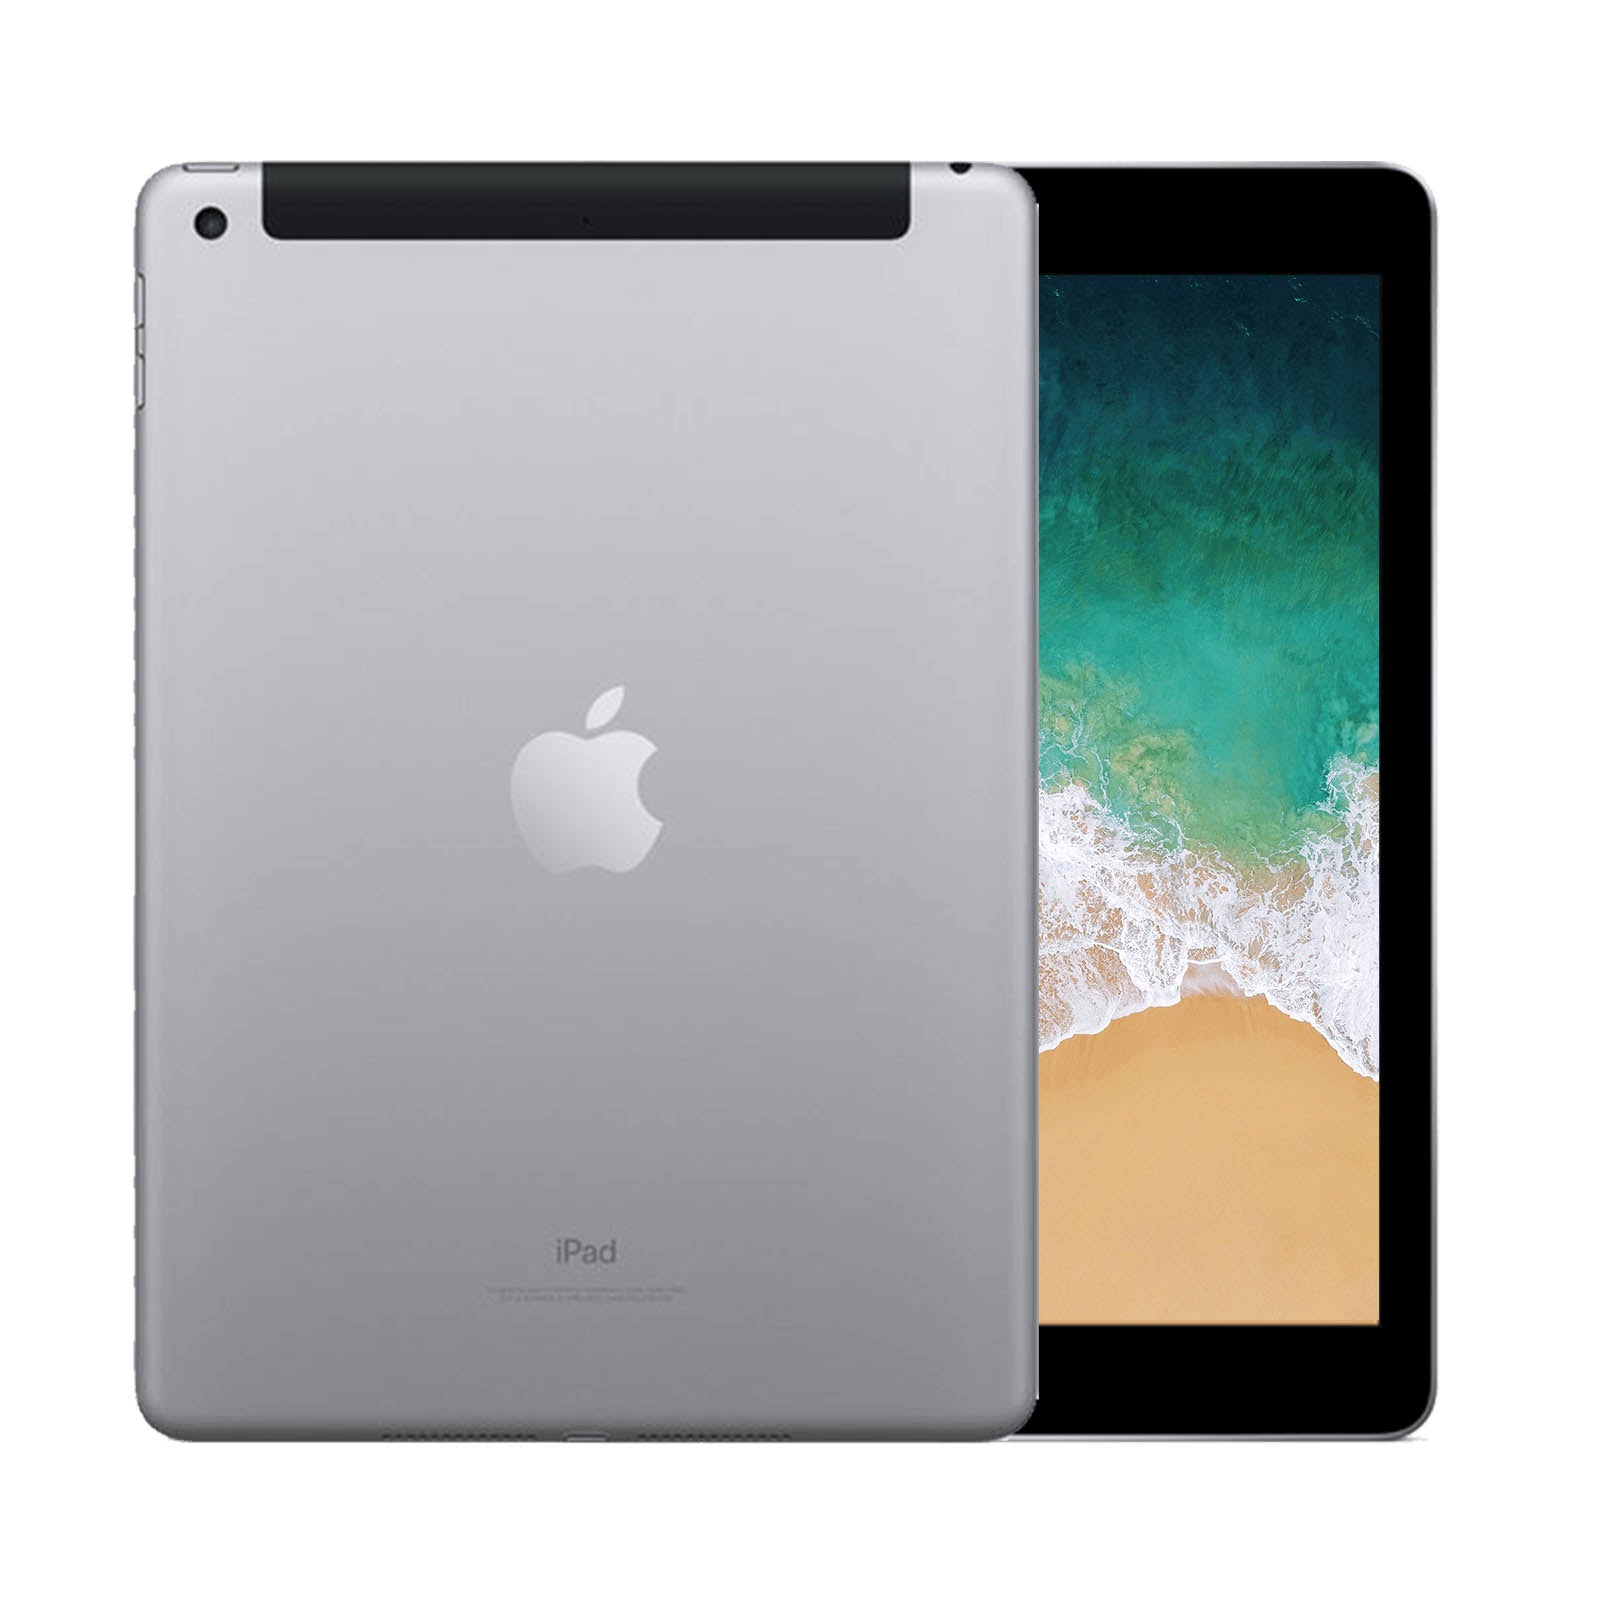 Apple iPad 4 16GB Black - WiFi - Good 16GB Black Good